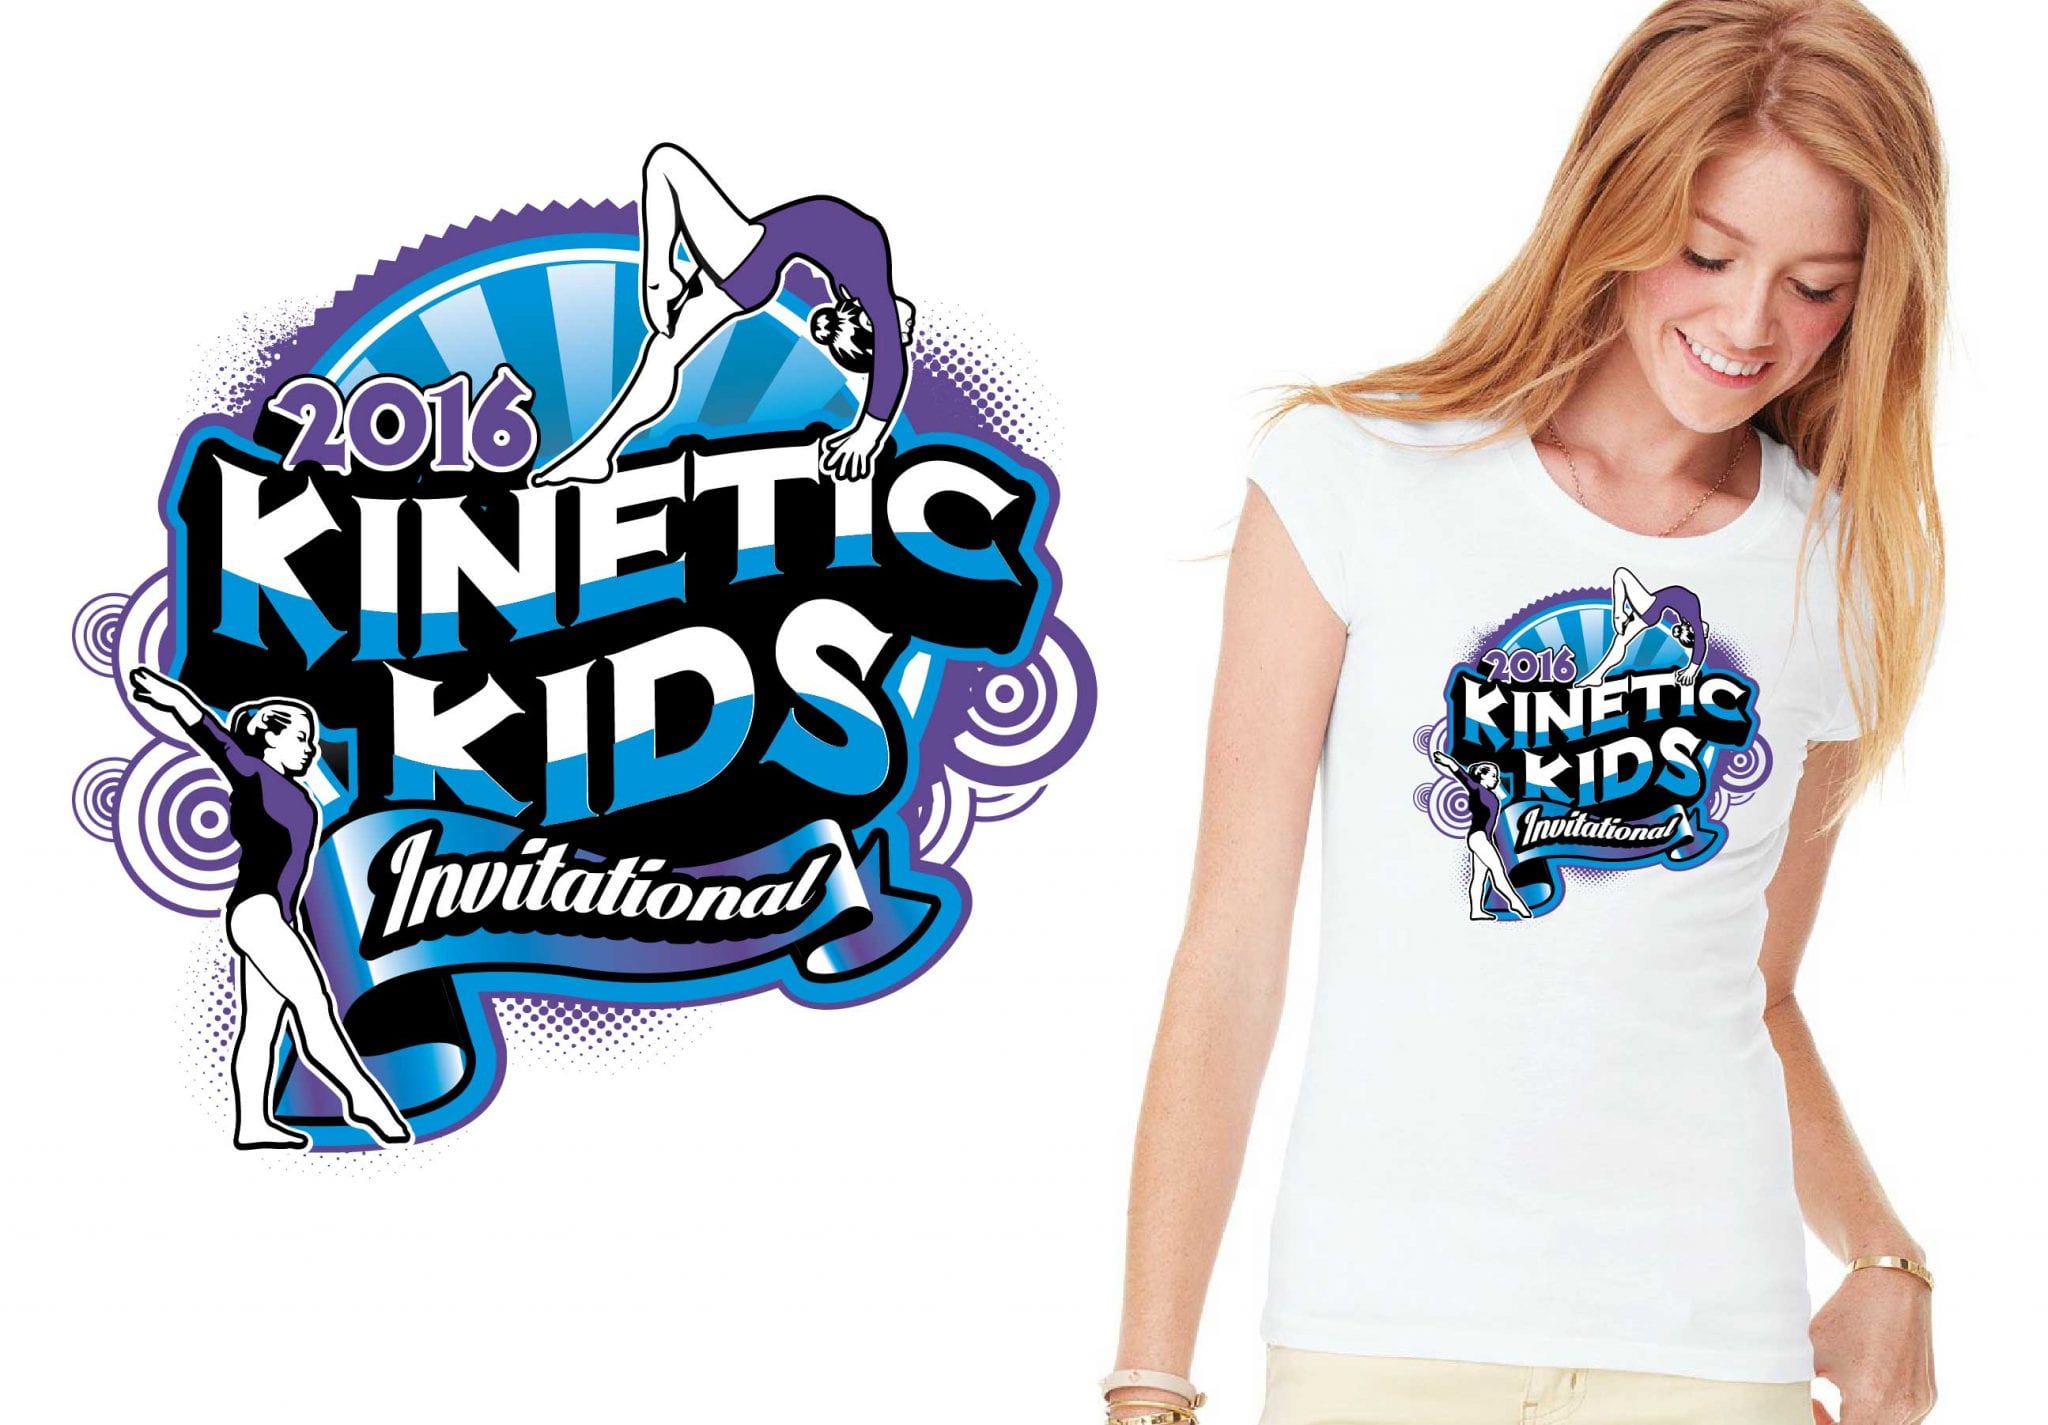 2016 Kinetic Kids Invitational girls gymnastic cool tshirt vector logo design by UrArtStudio